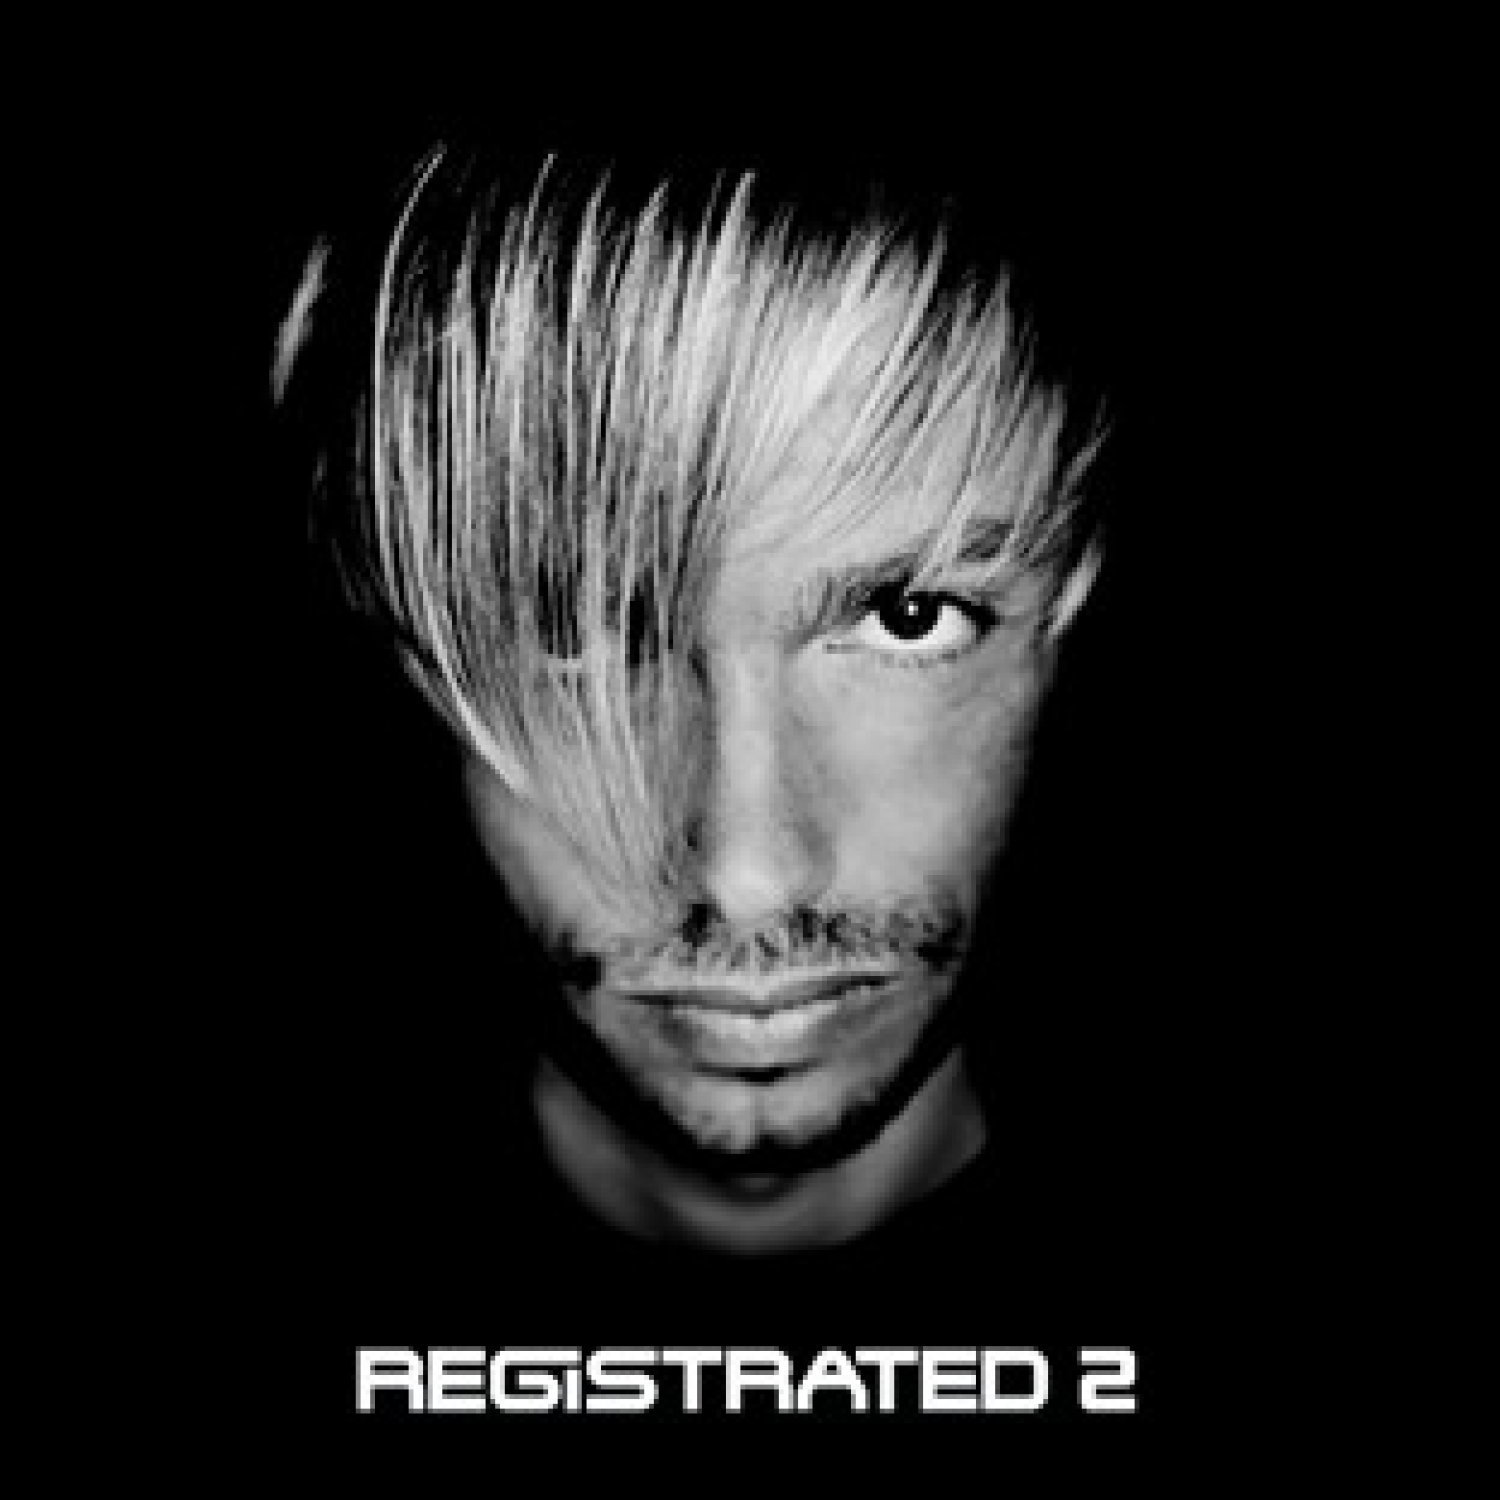 Registrated 2, le nouvel album de Regi